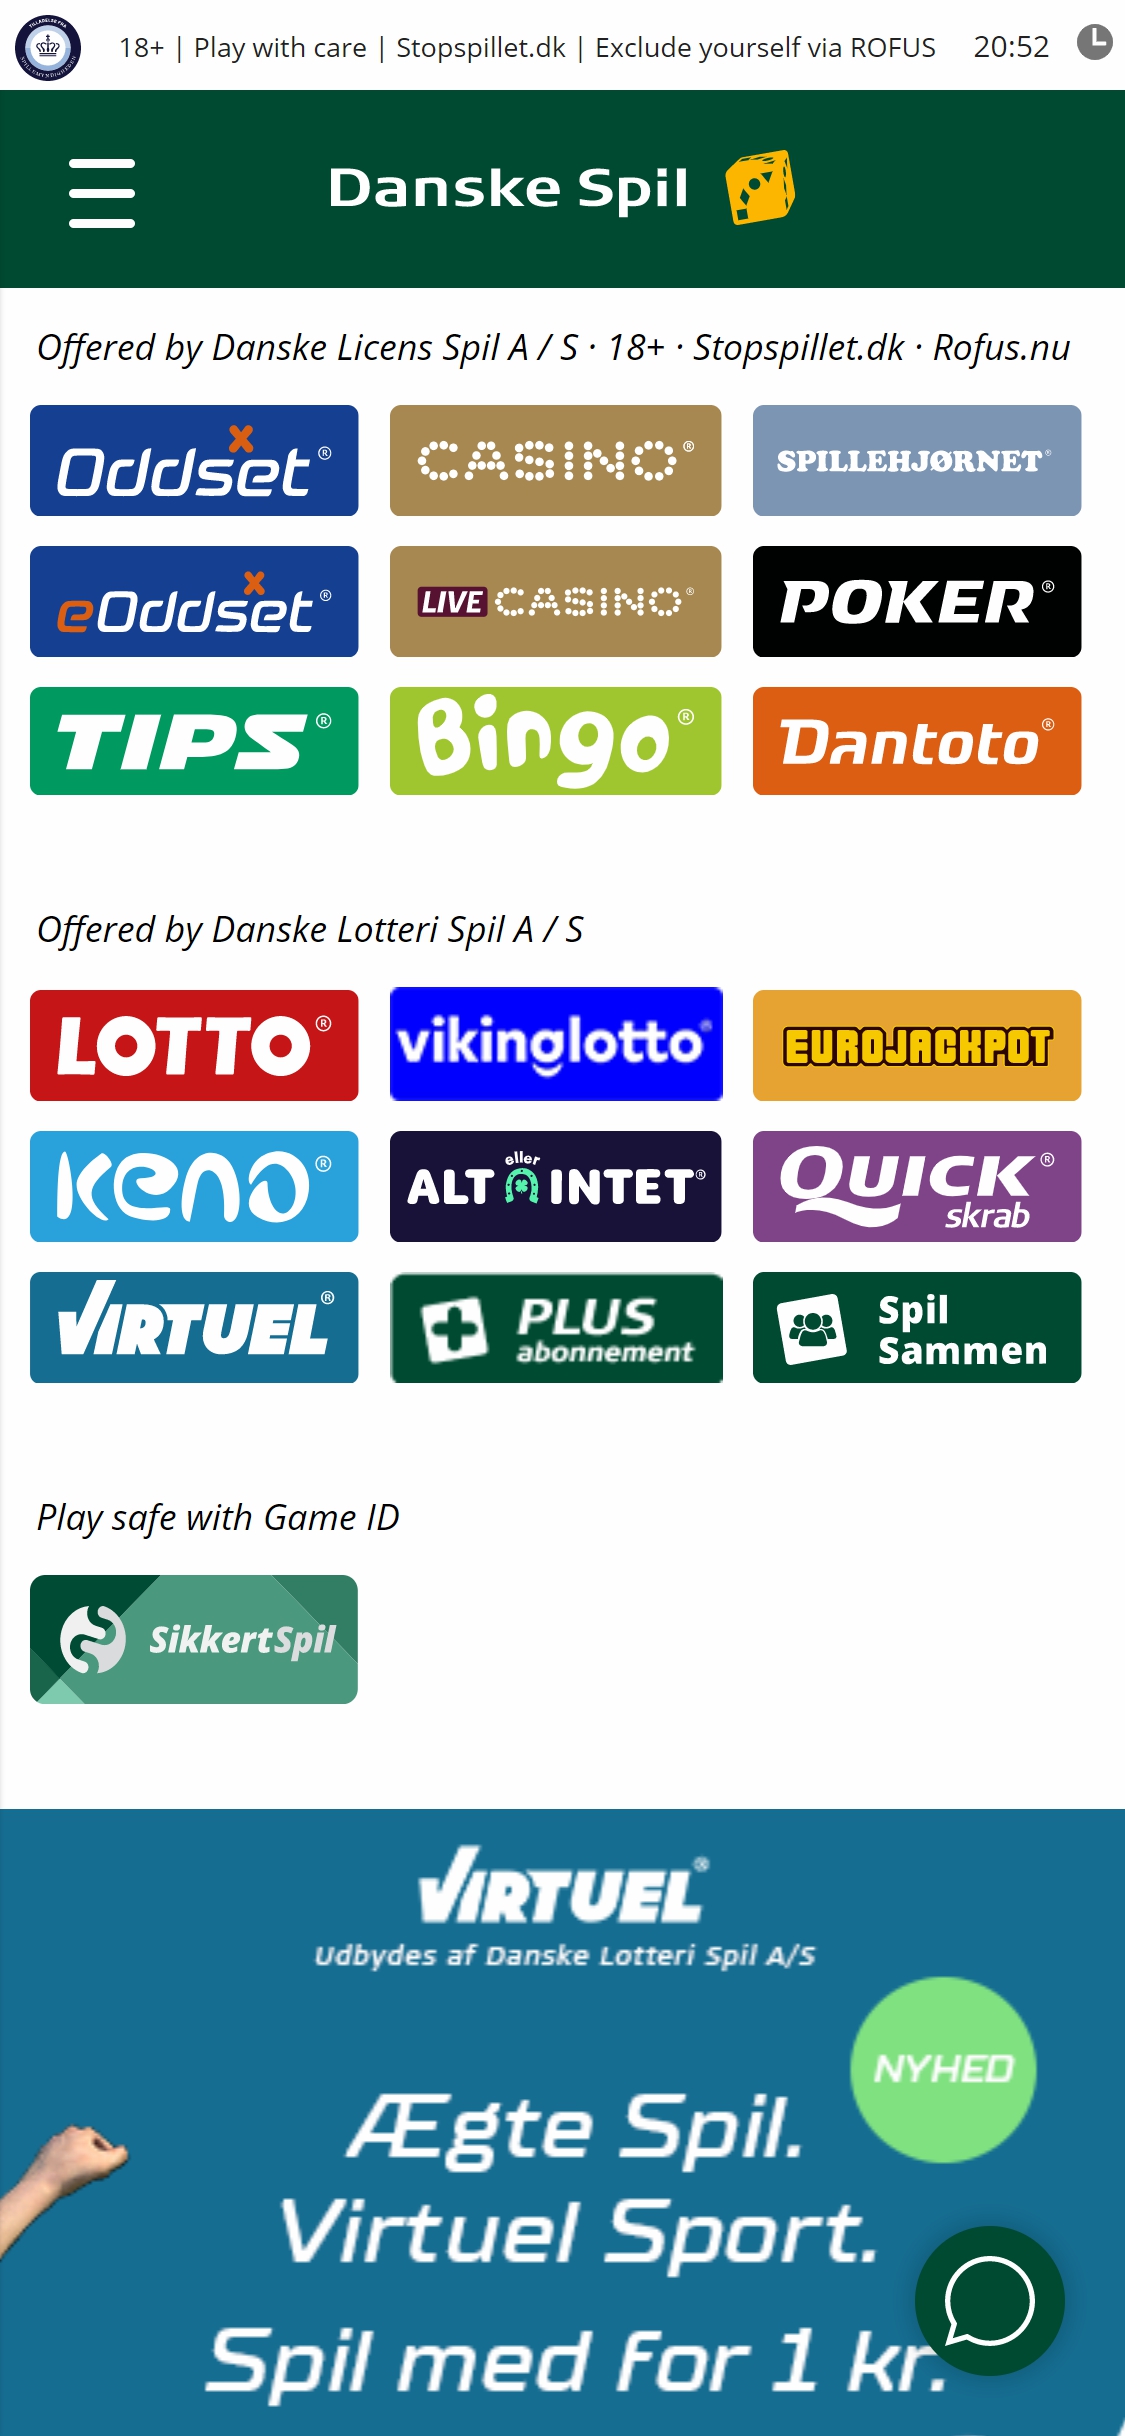 Danske Spil Casino Mobile Review